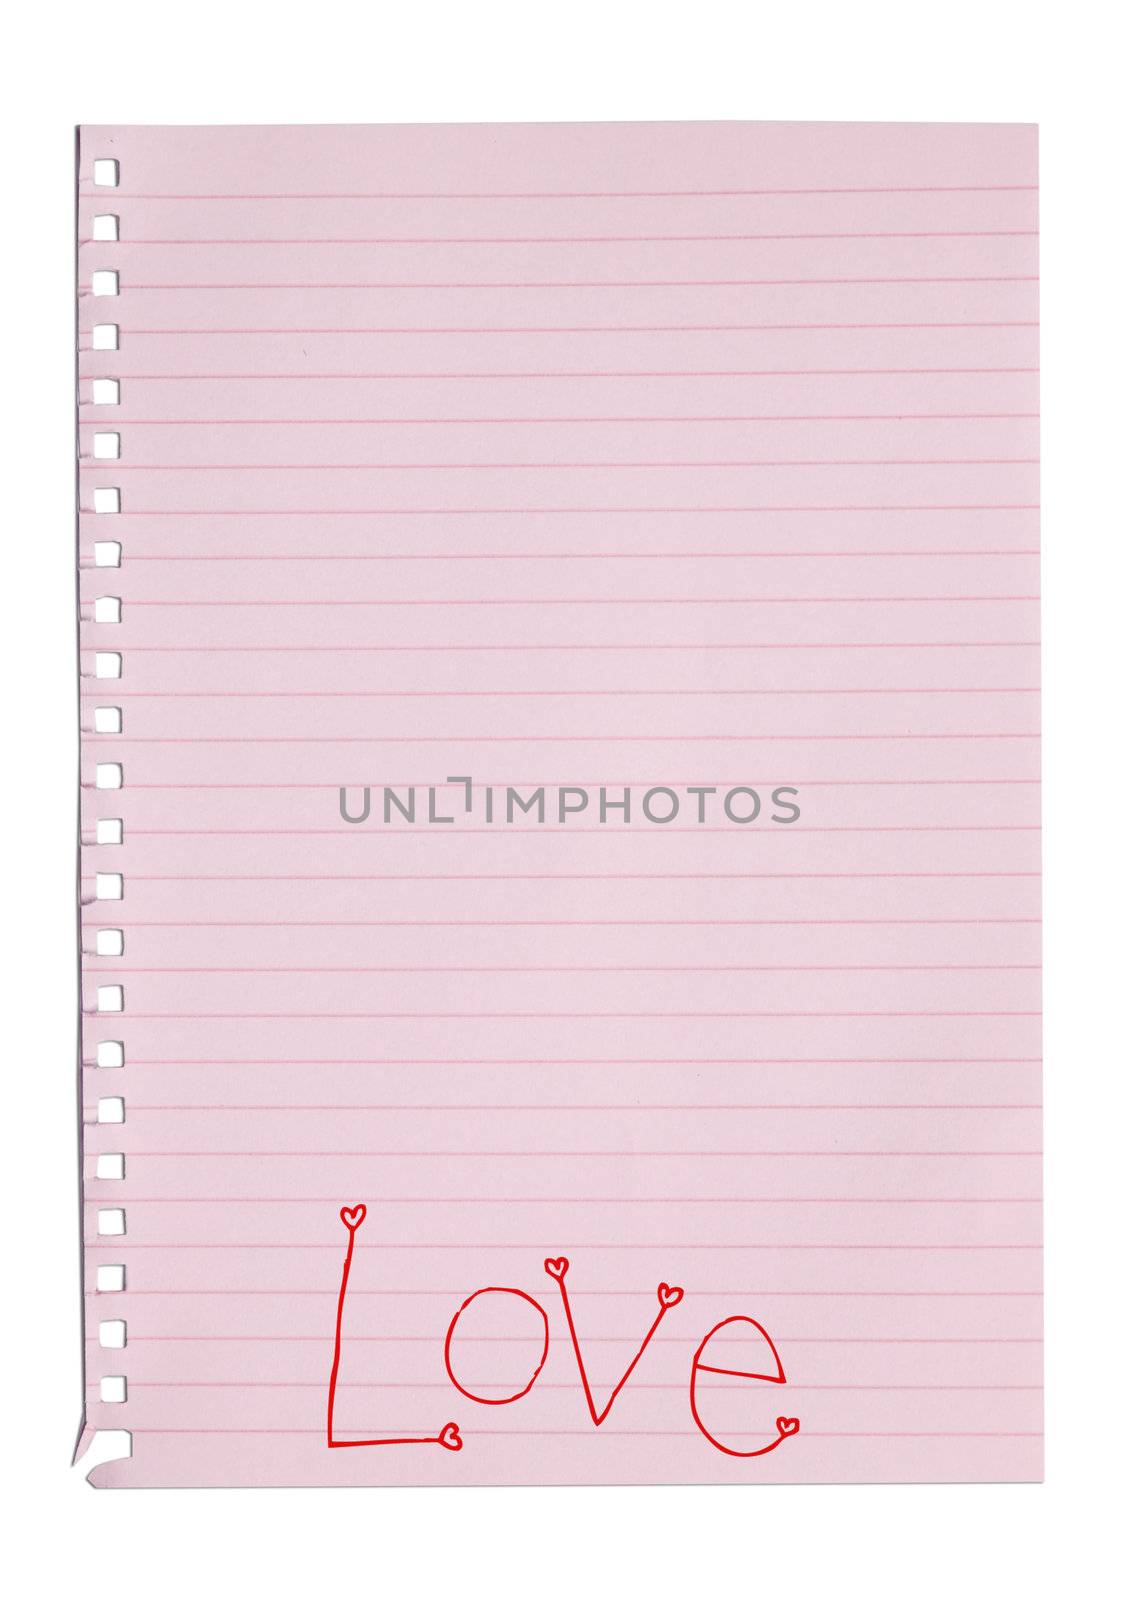 Handwriting love word on pink note paper